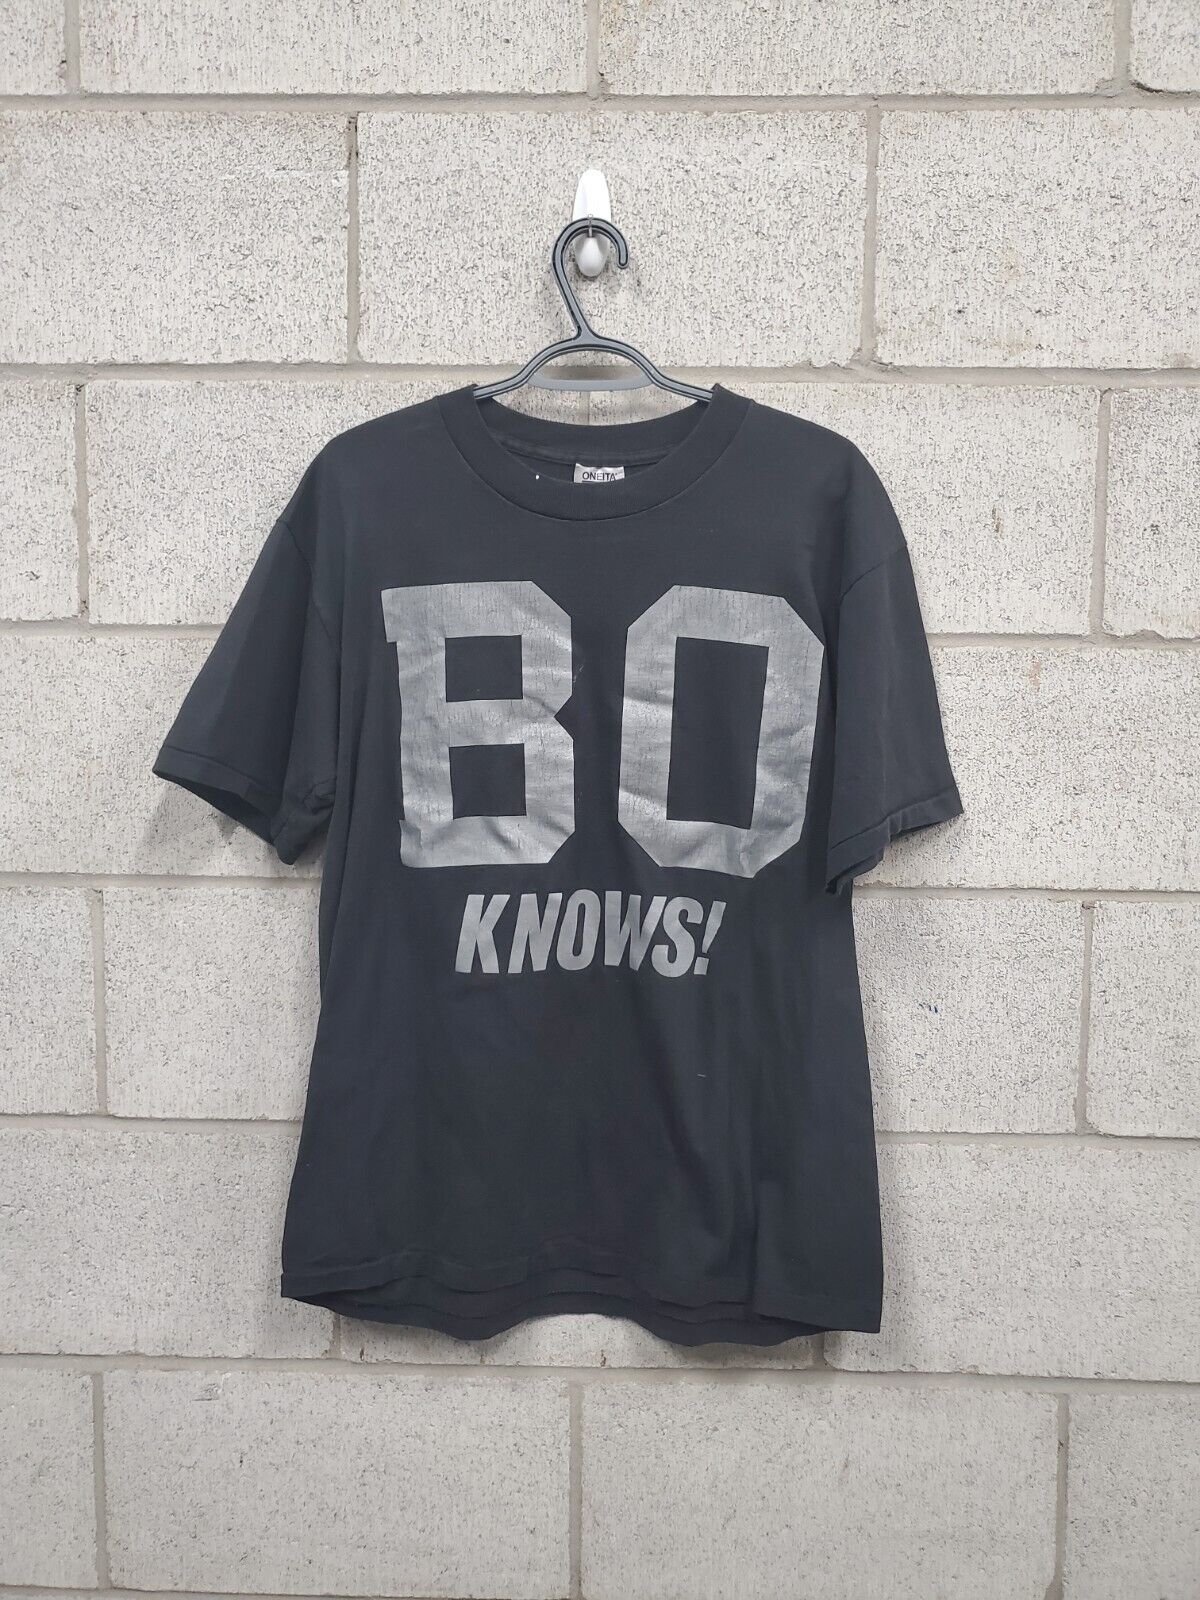 Mens BO Knows! T-Shirt Size XL